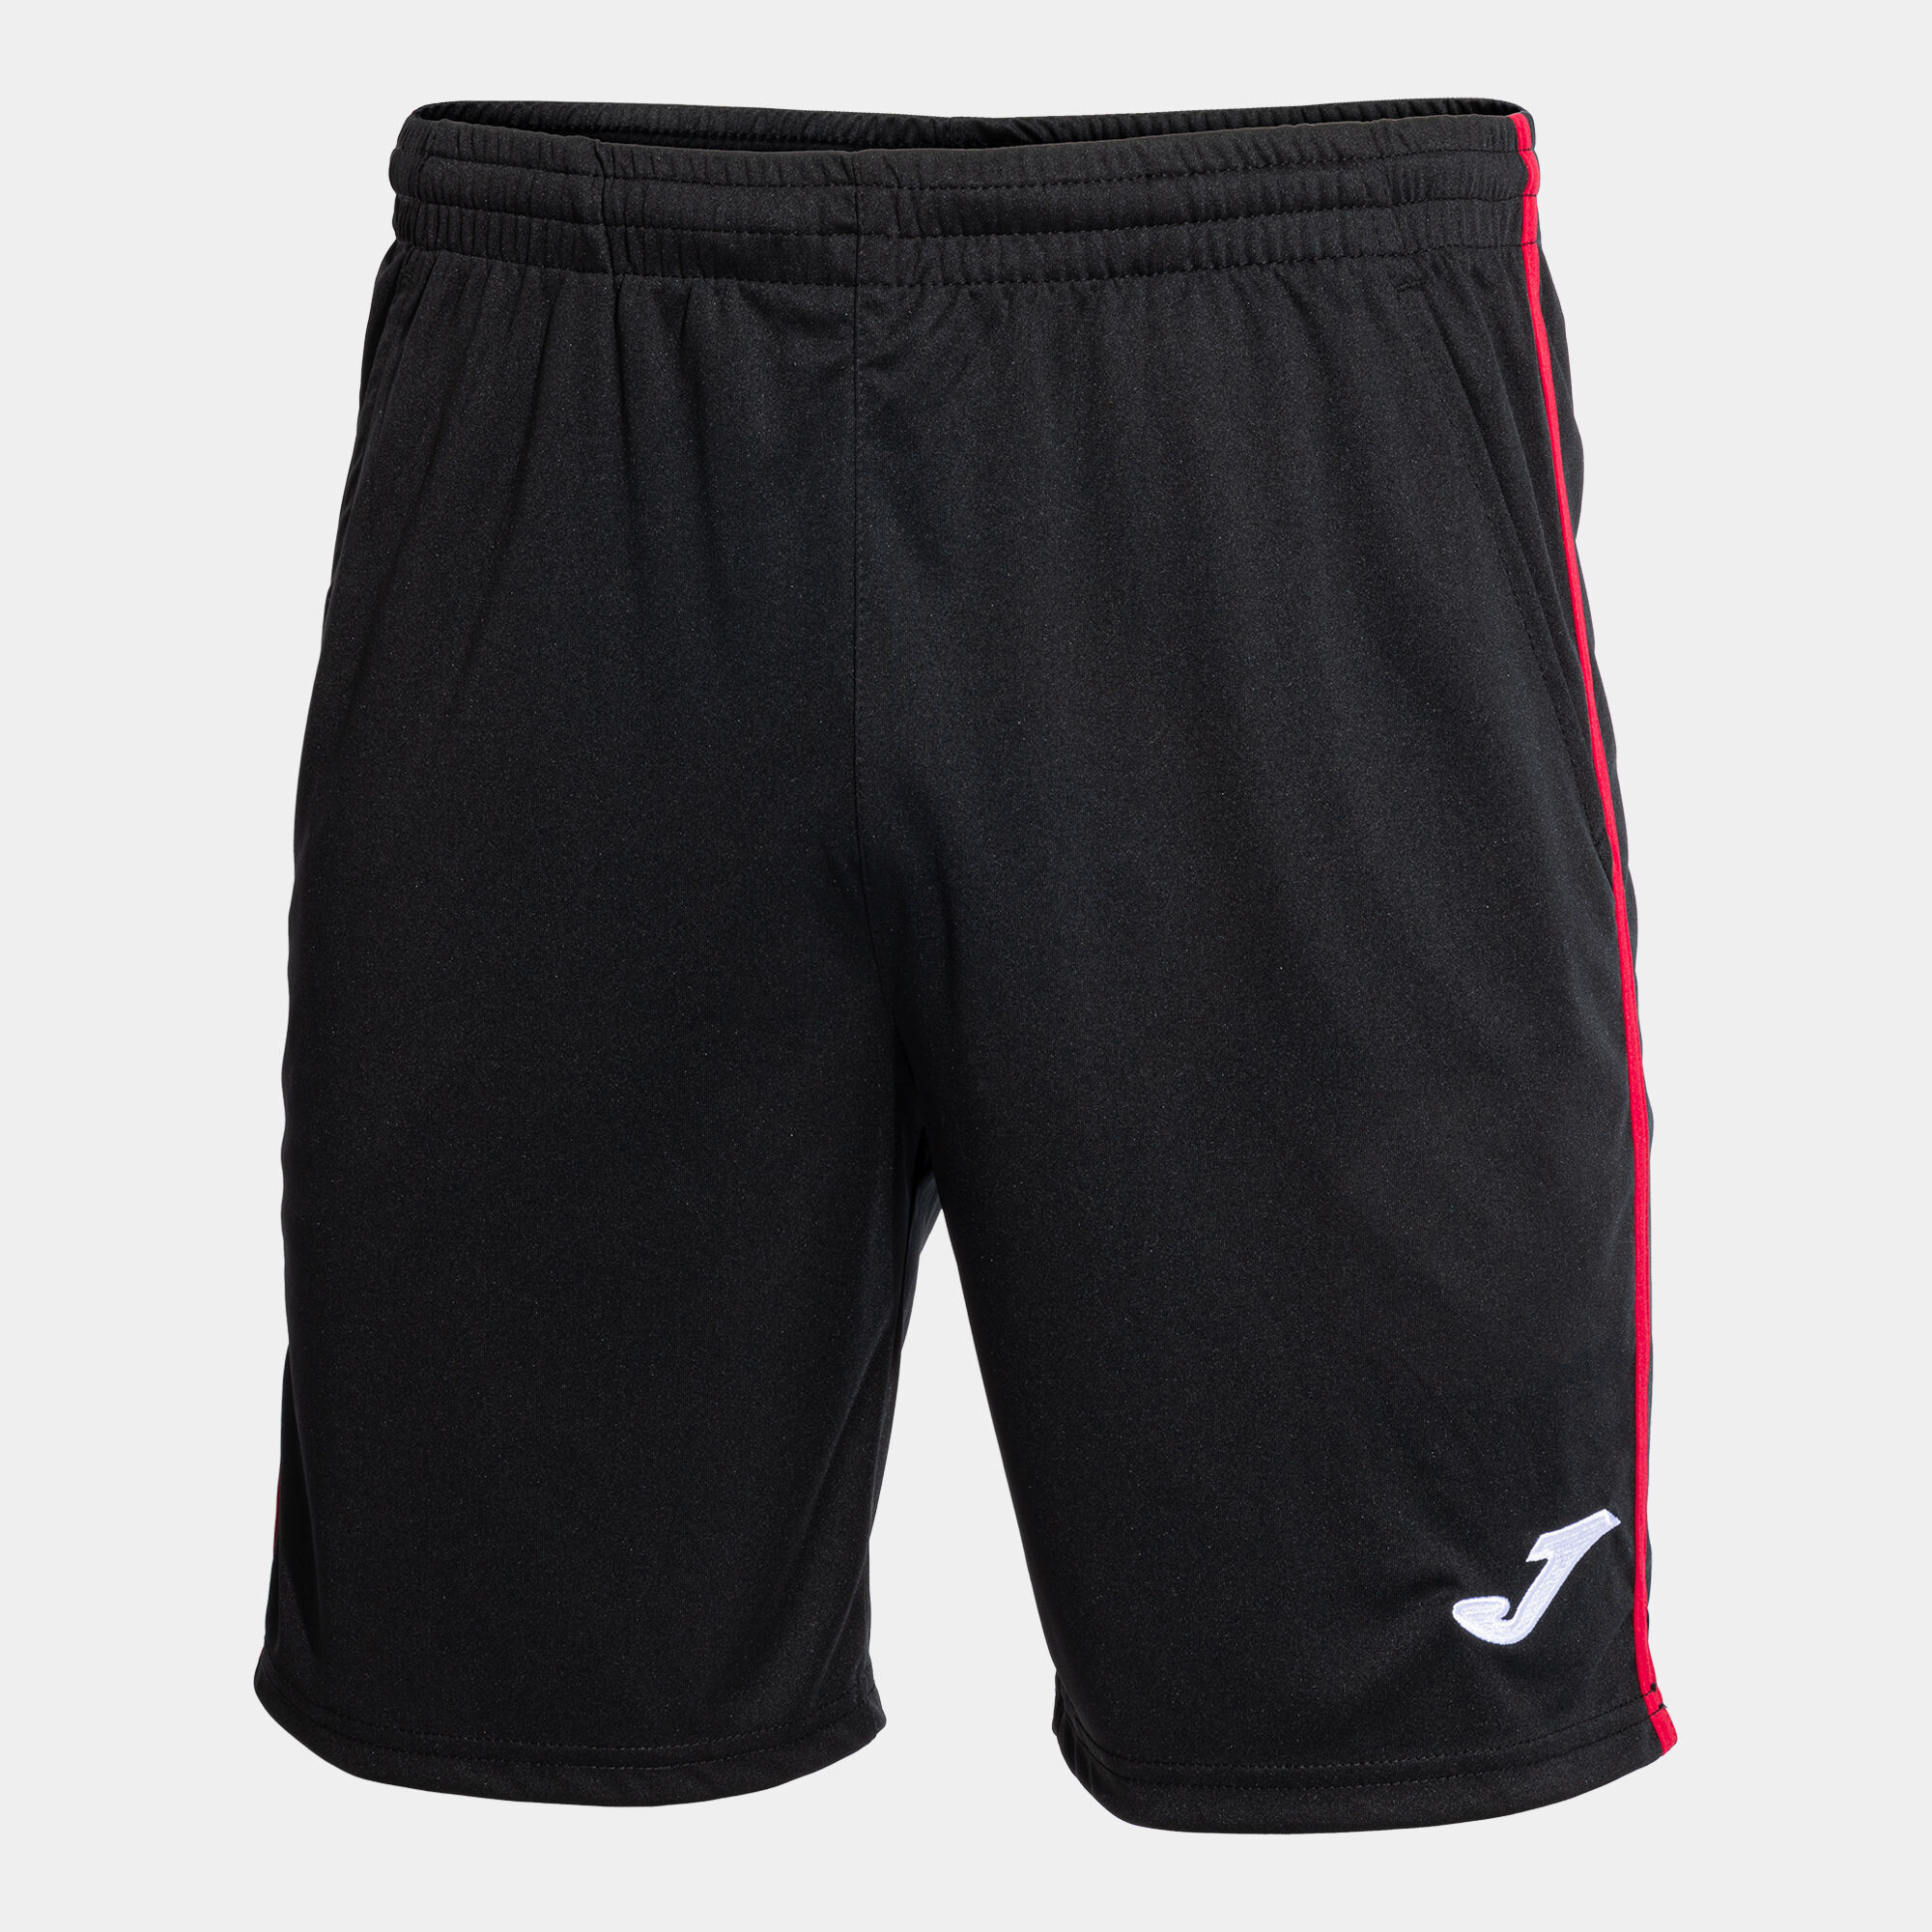 Bermuda shorts man Open III black red